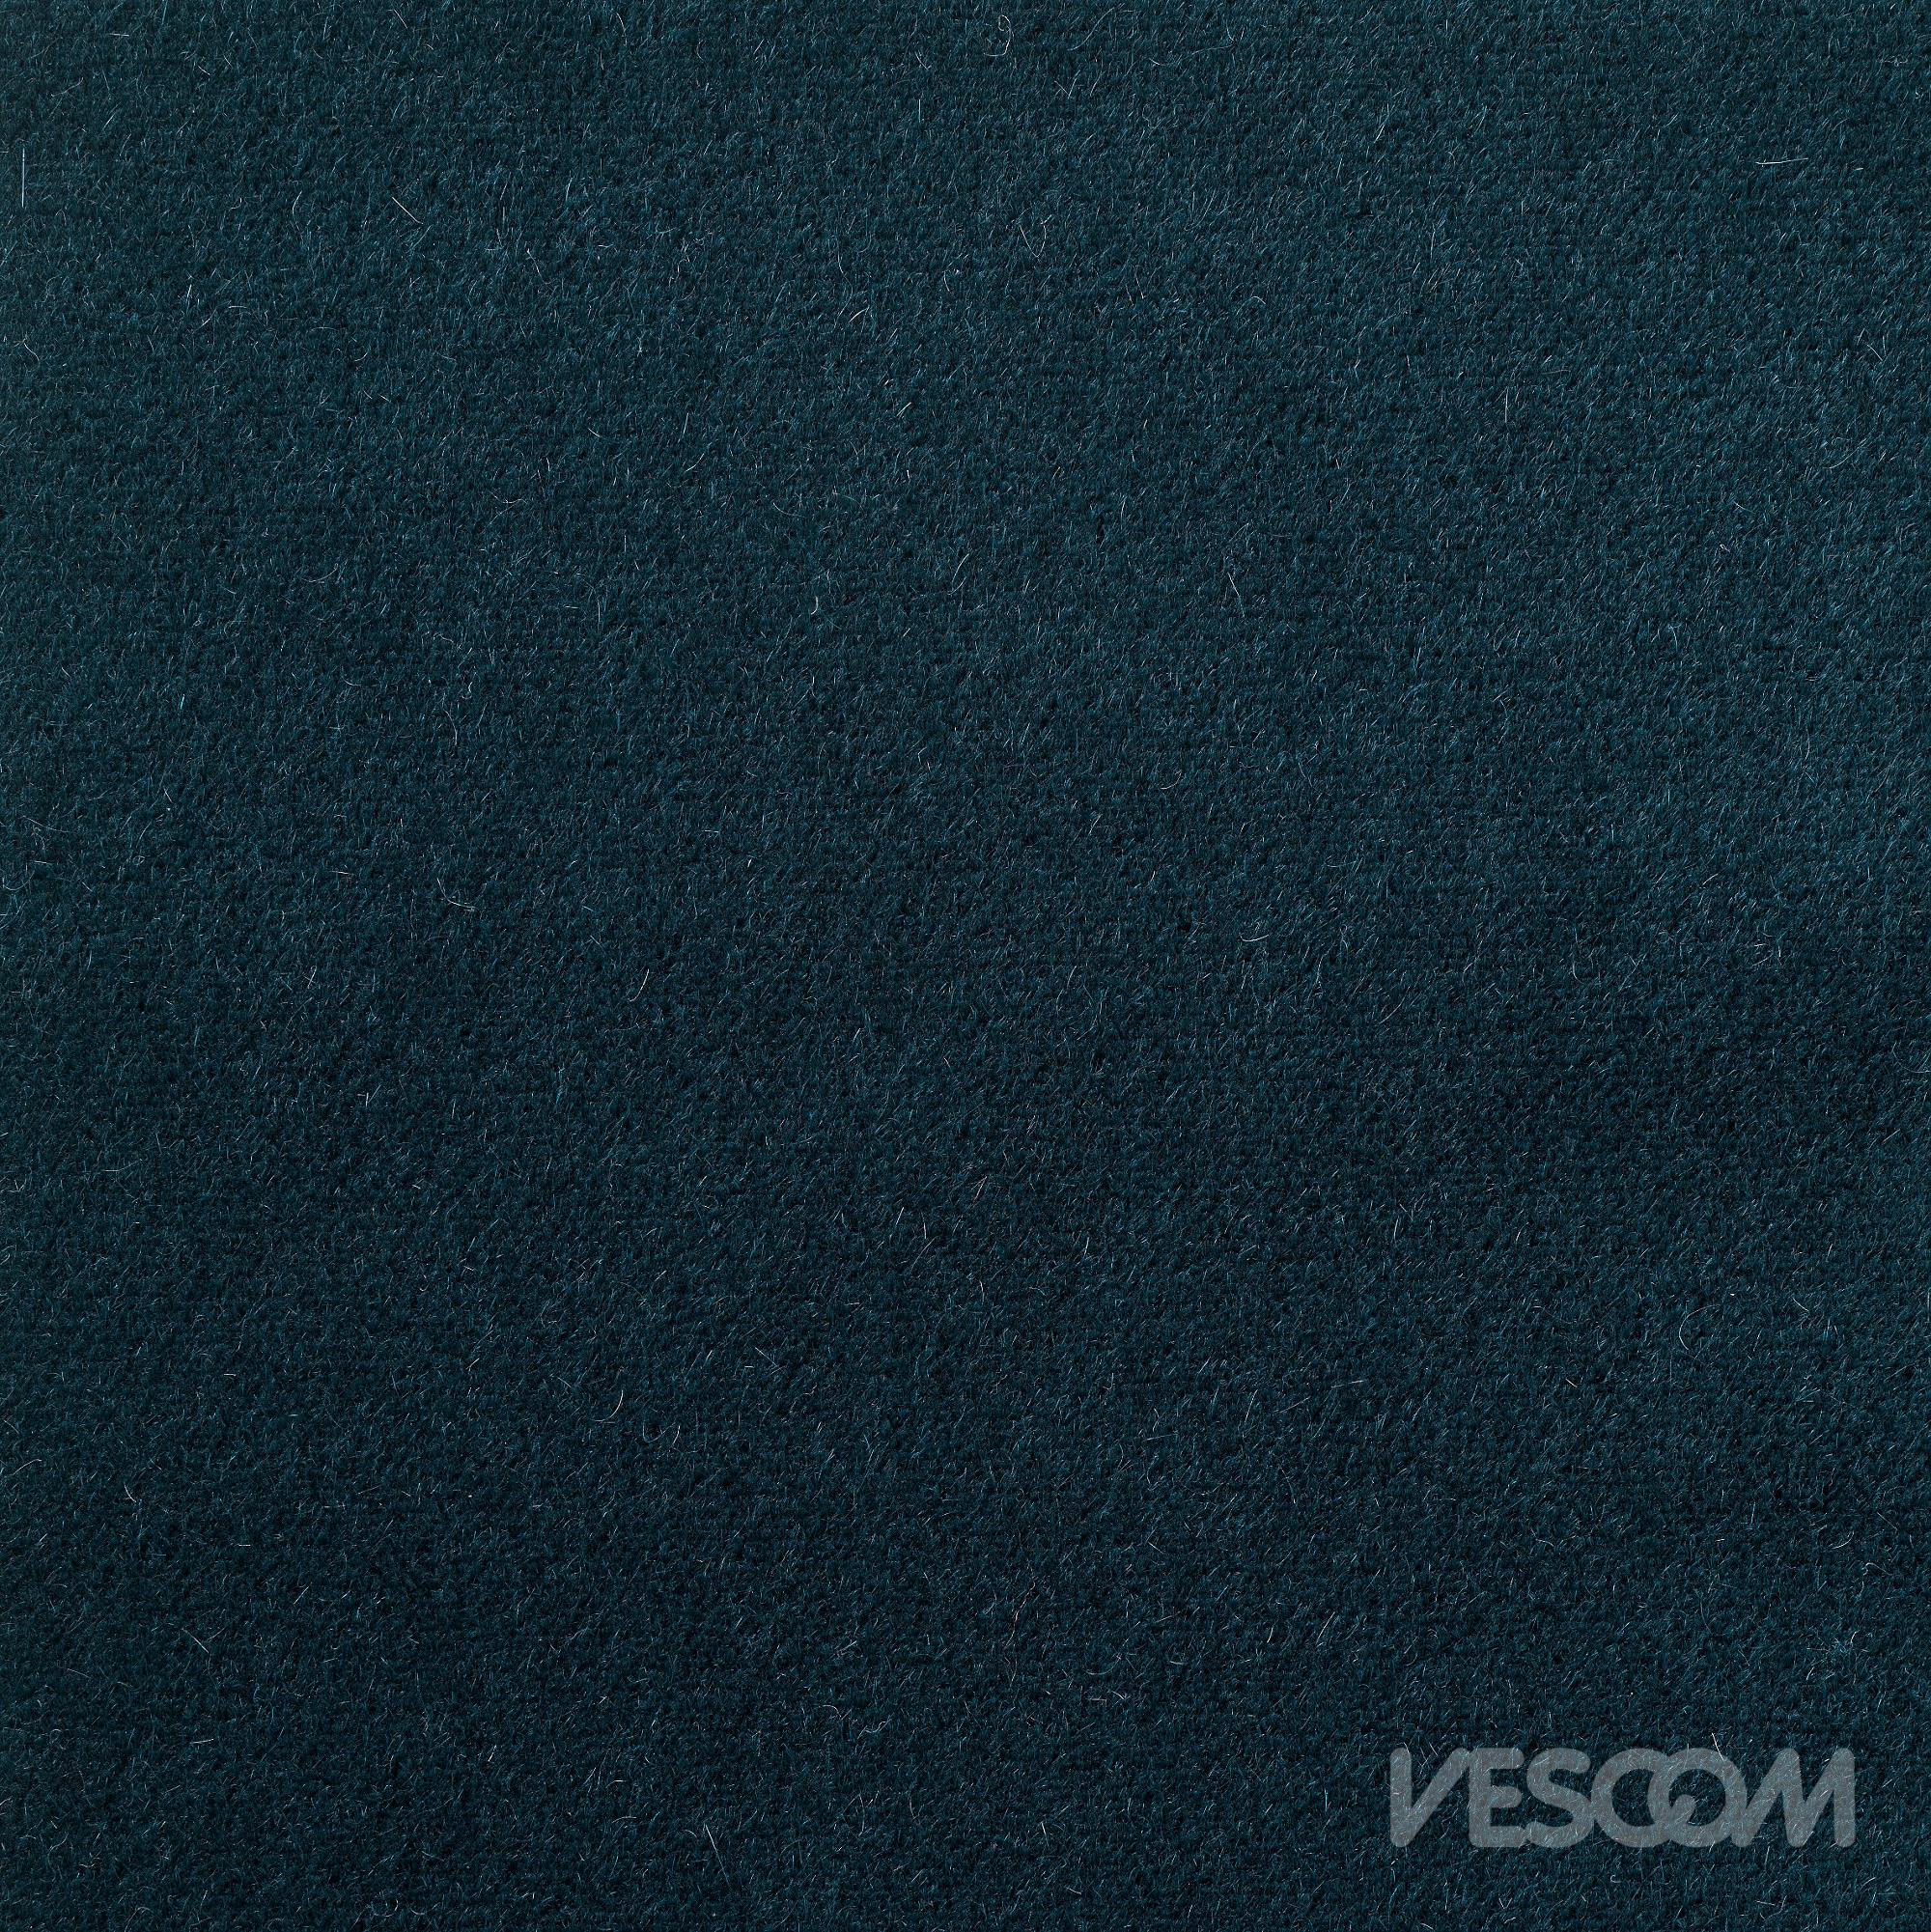 Vescom Ariana Upholstery Fabric 7061.02